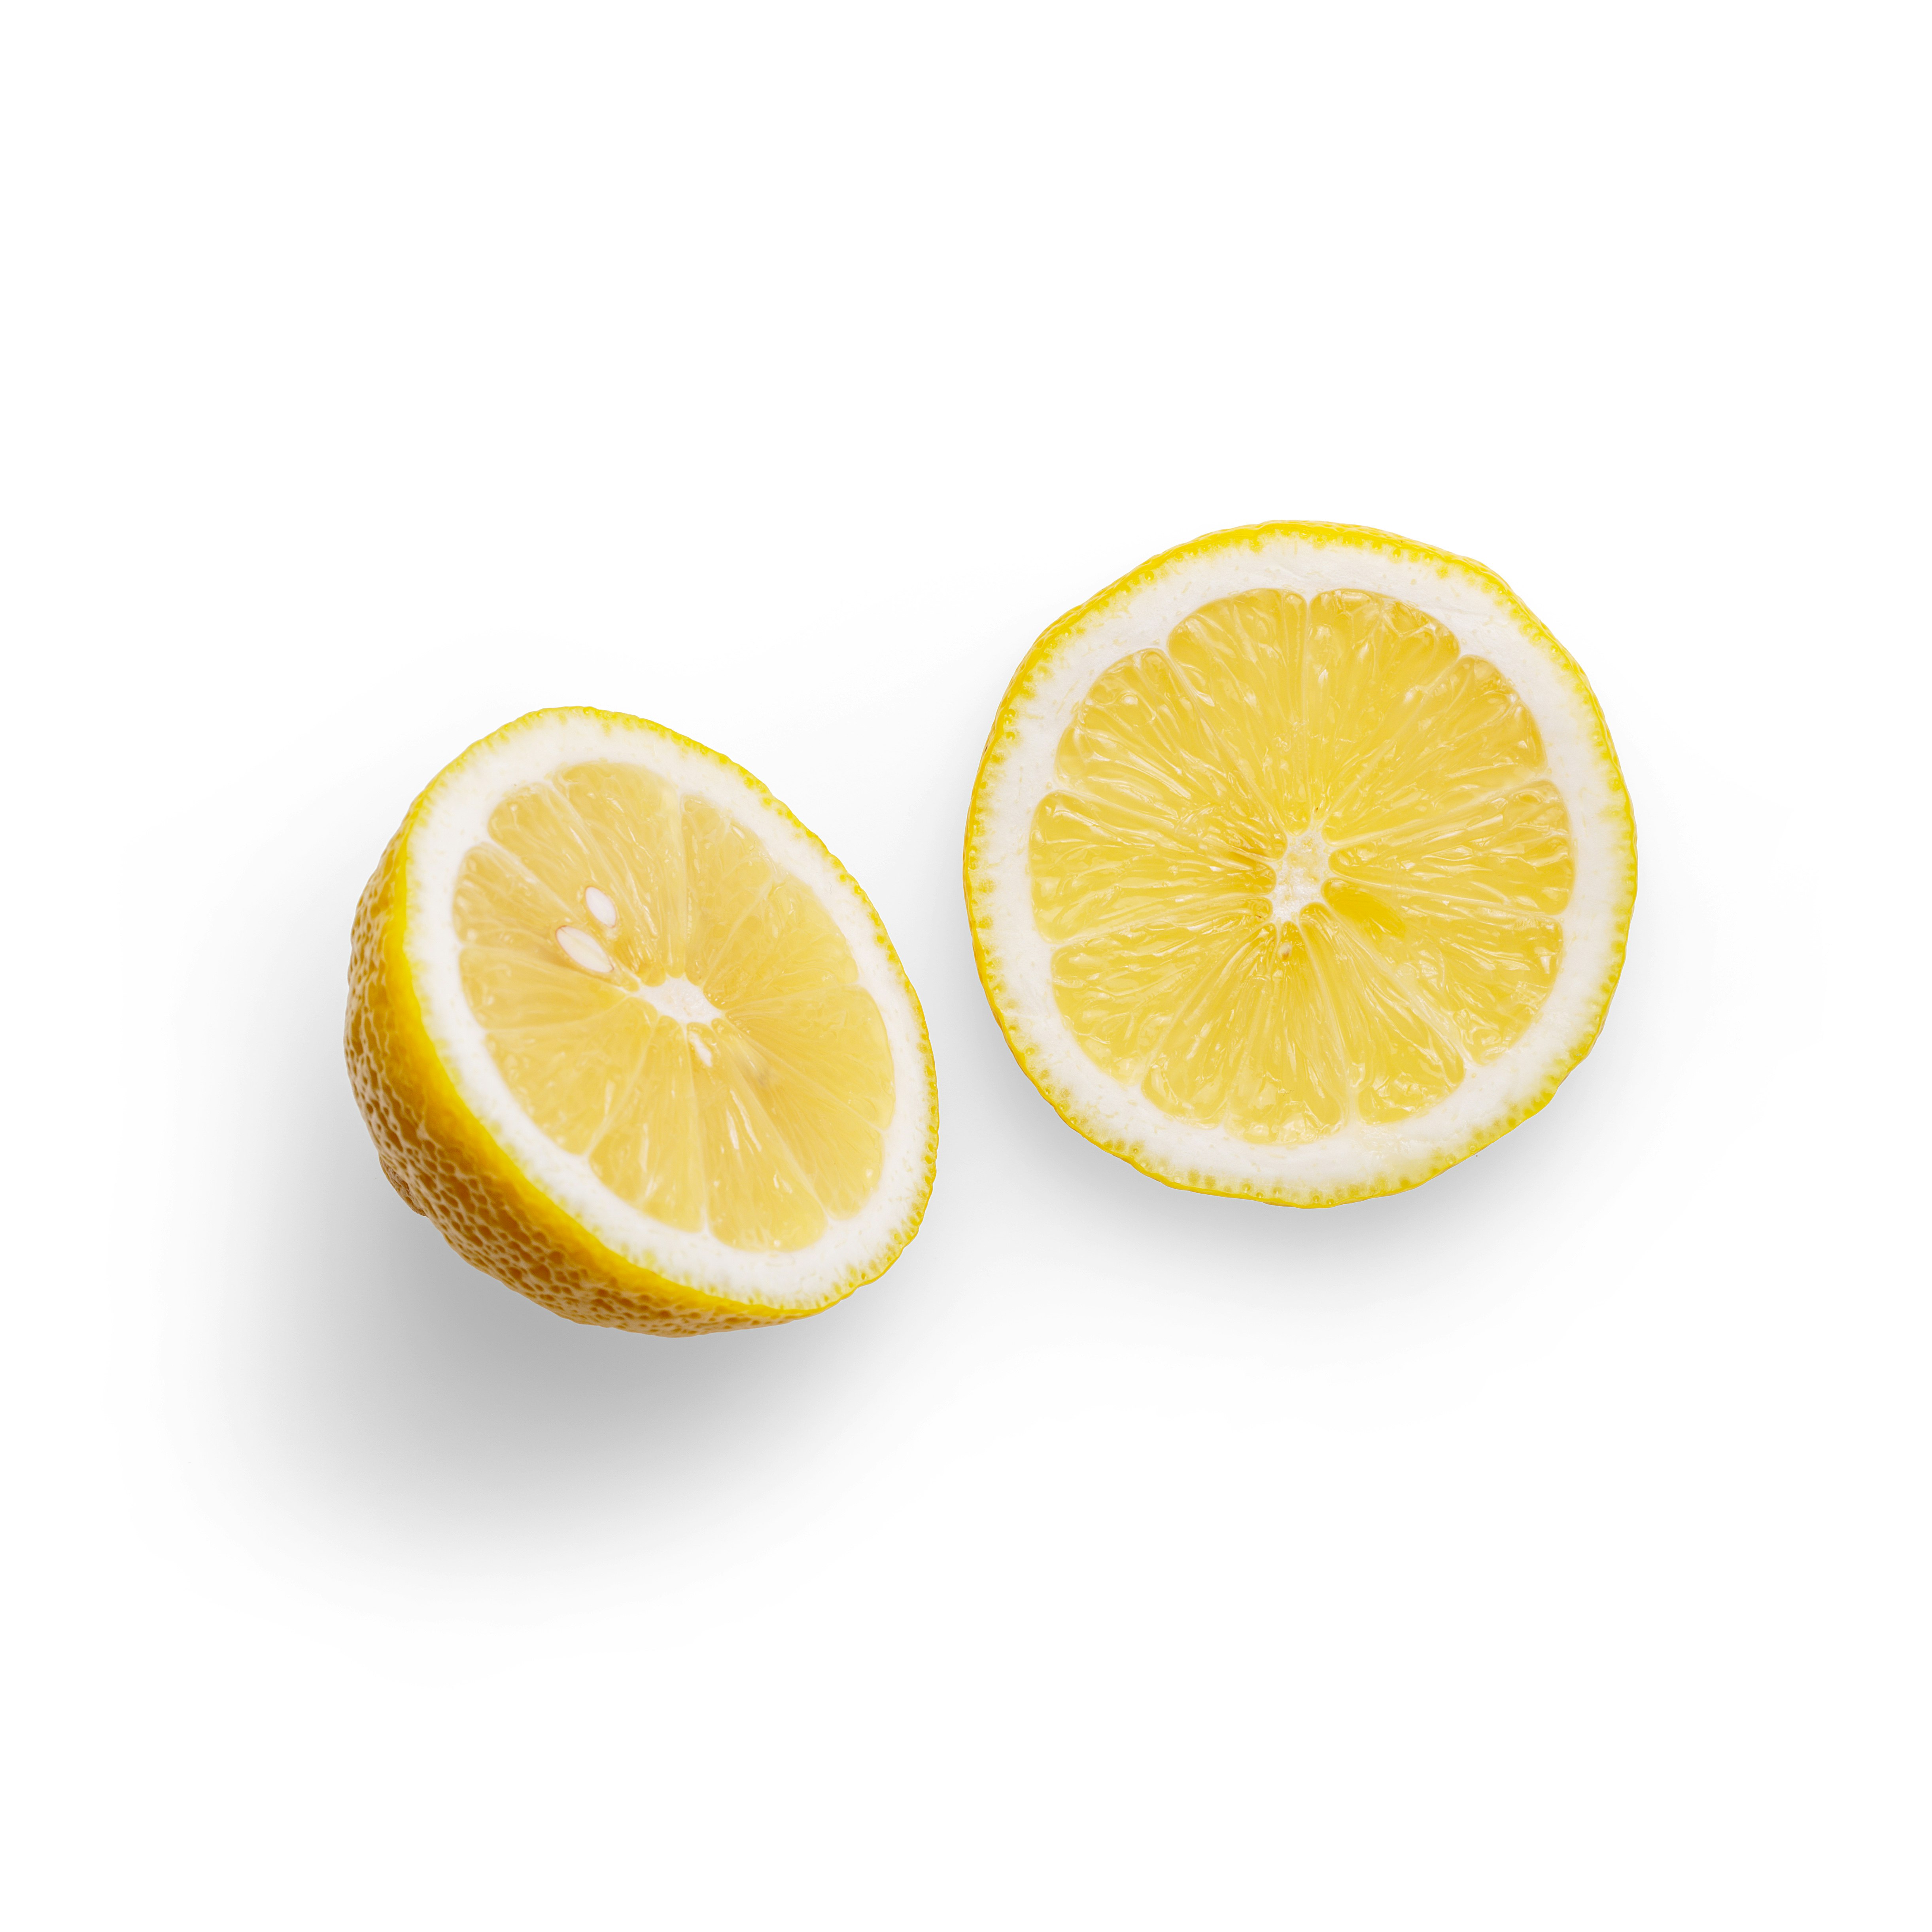 Quality photo of half a lemon on a white background